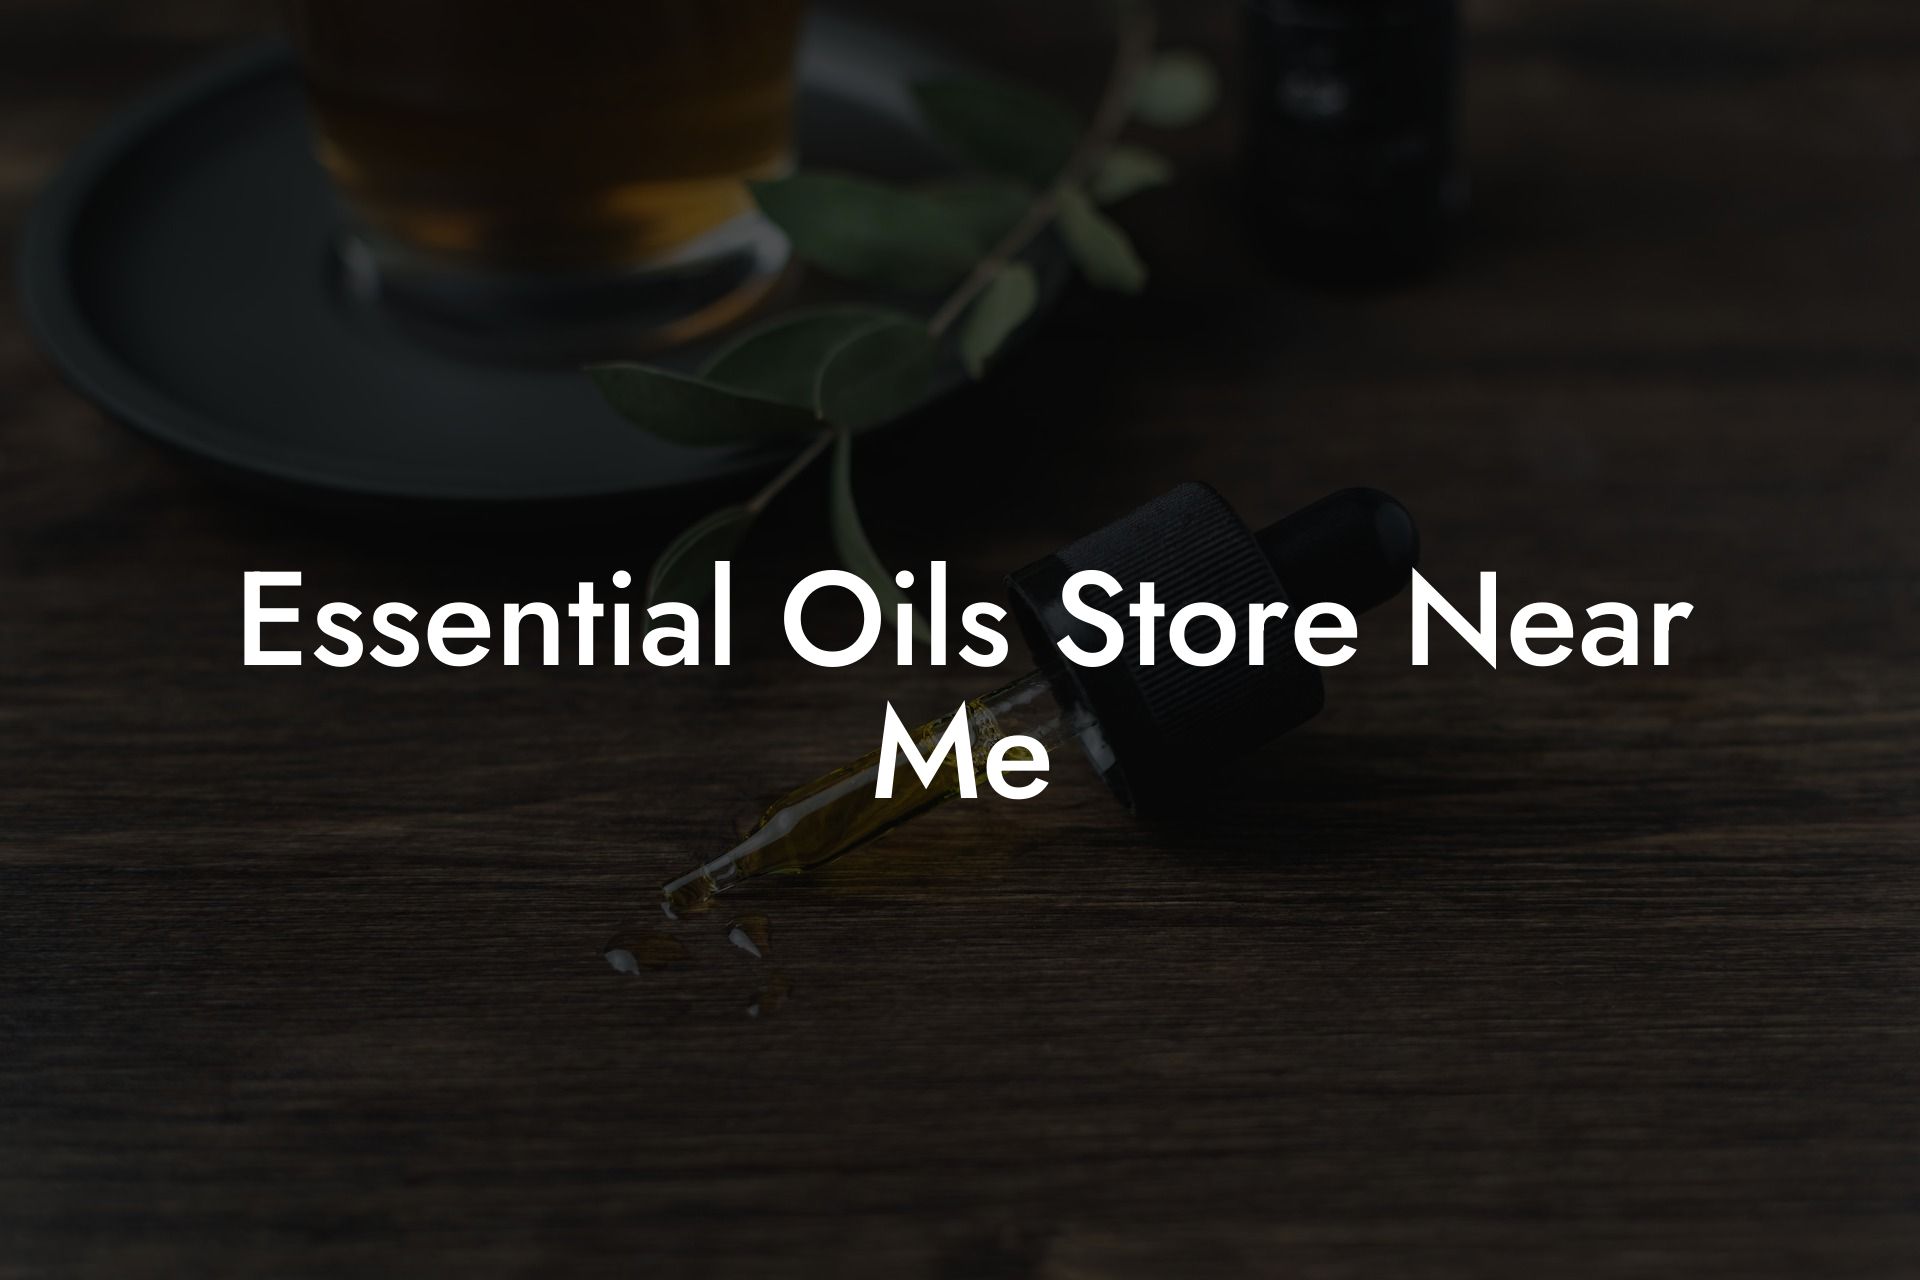 Essential Oils Store Near Me